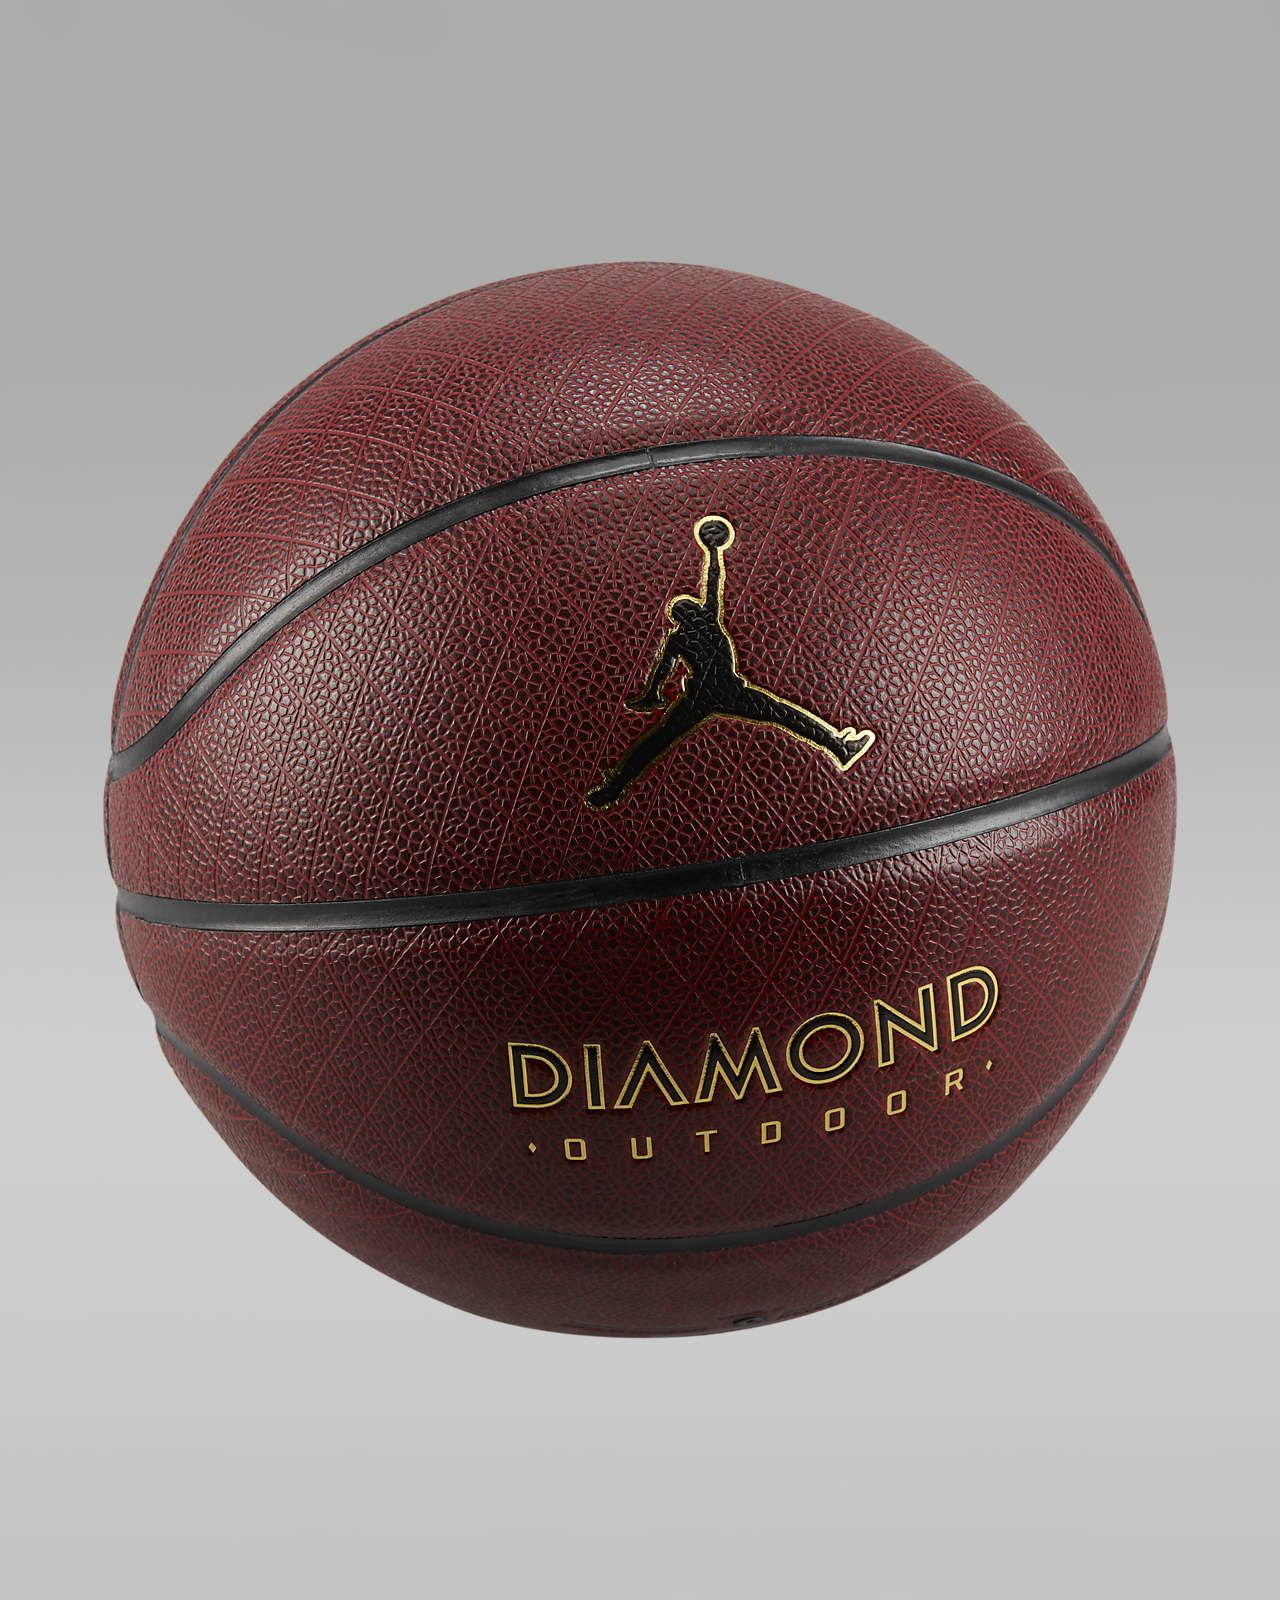 Jordan Diamond Outdoor 8P 篮球